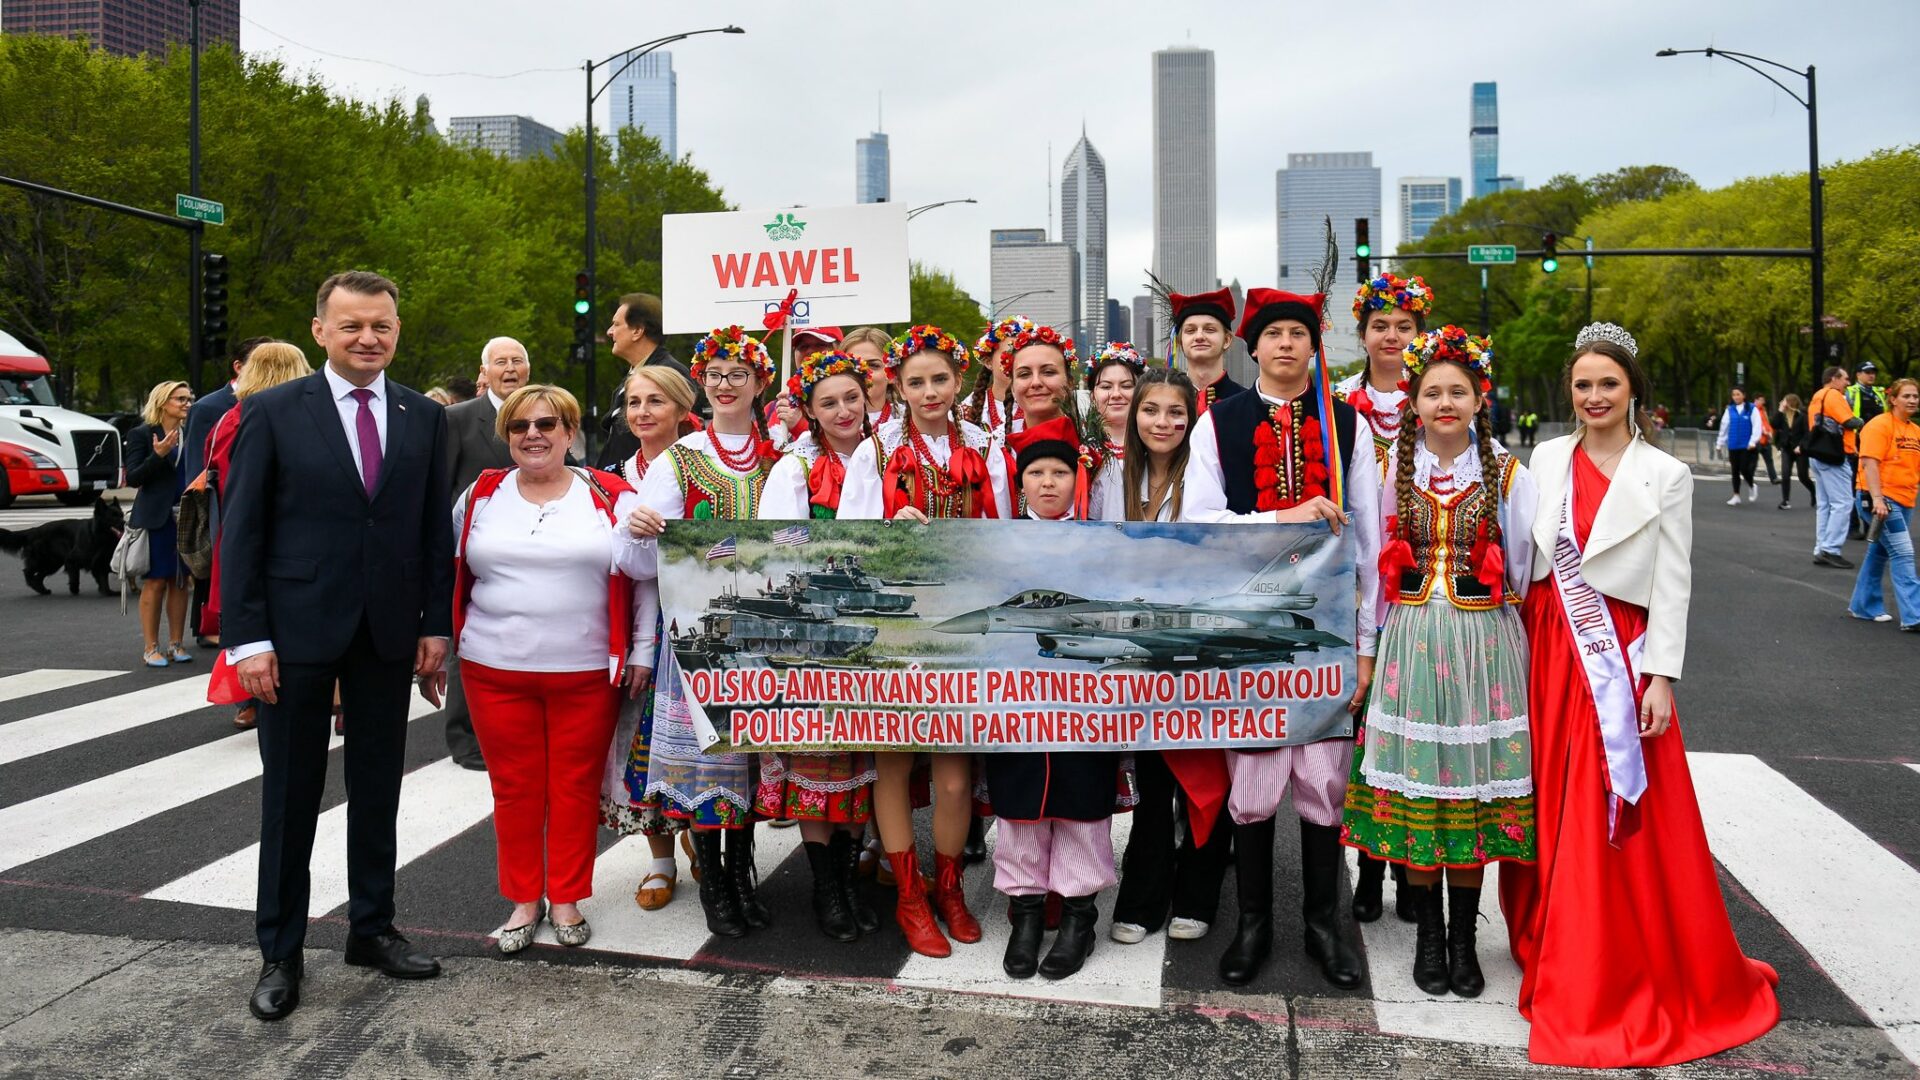 Polish Parade in Chicago PolishAmerican Partnership for Peace